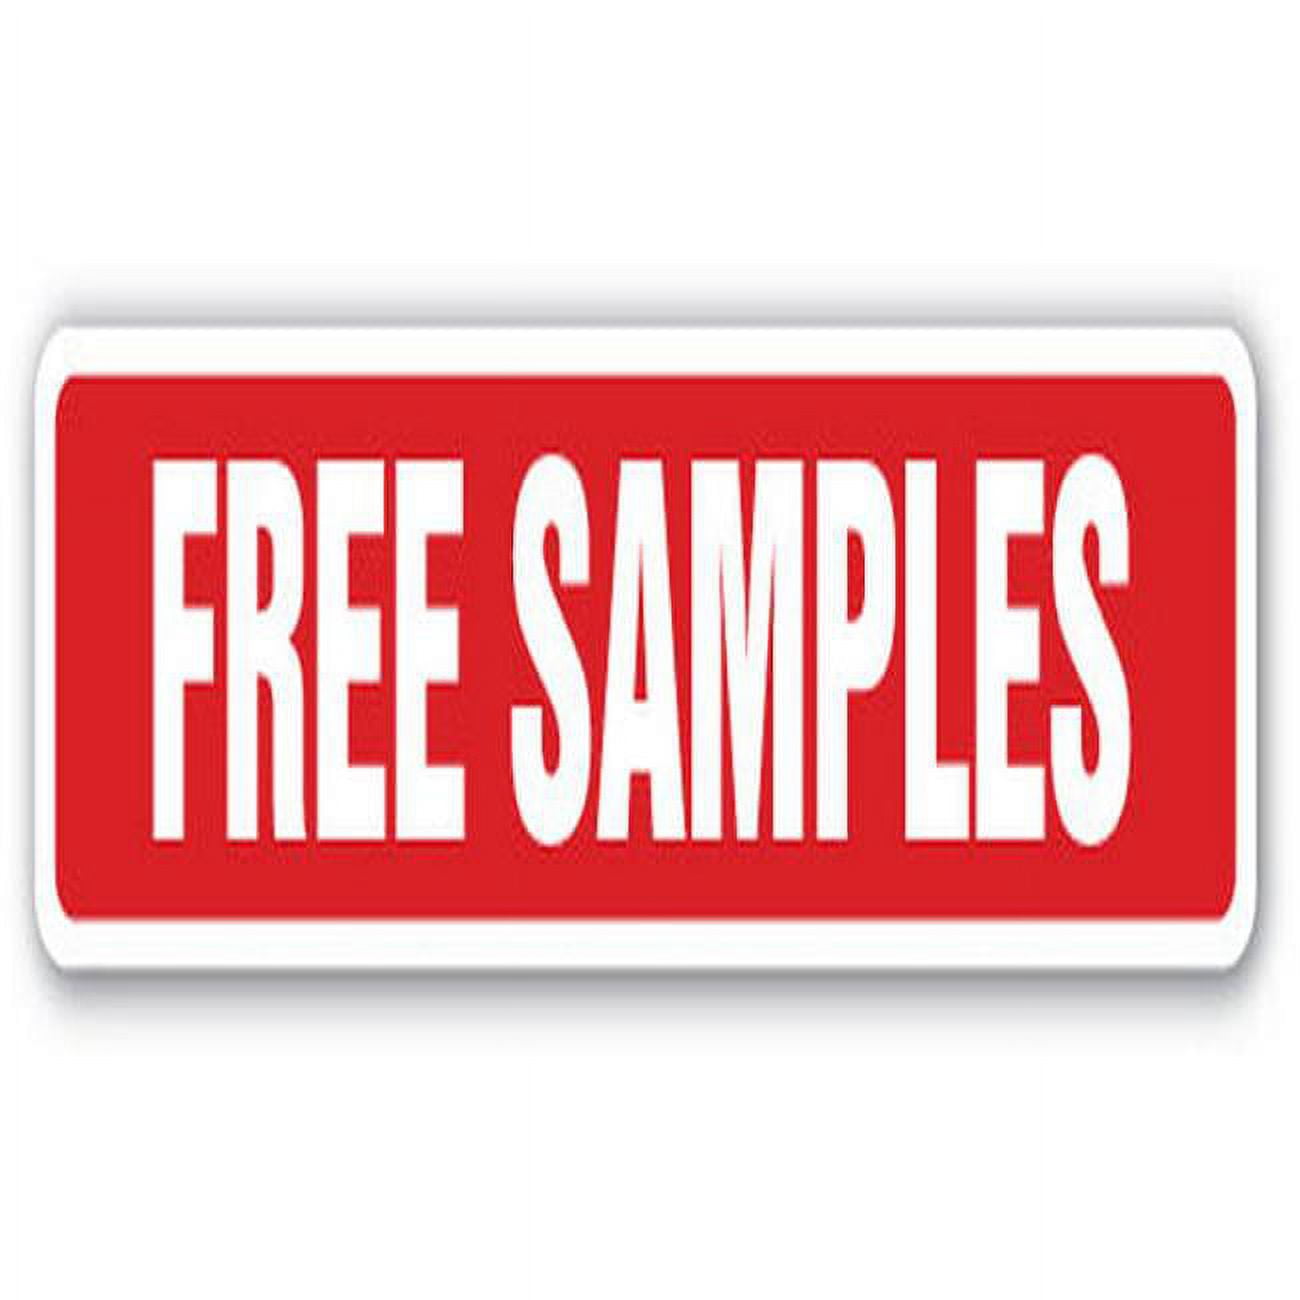 Free sample giveaways